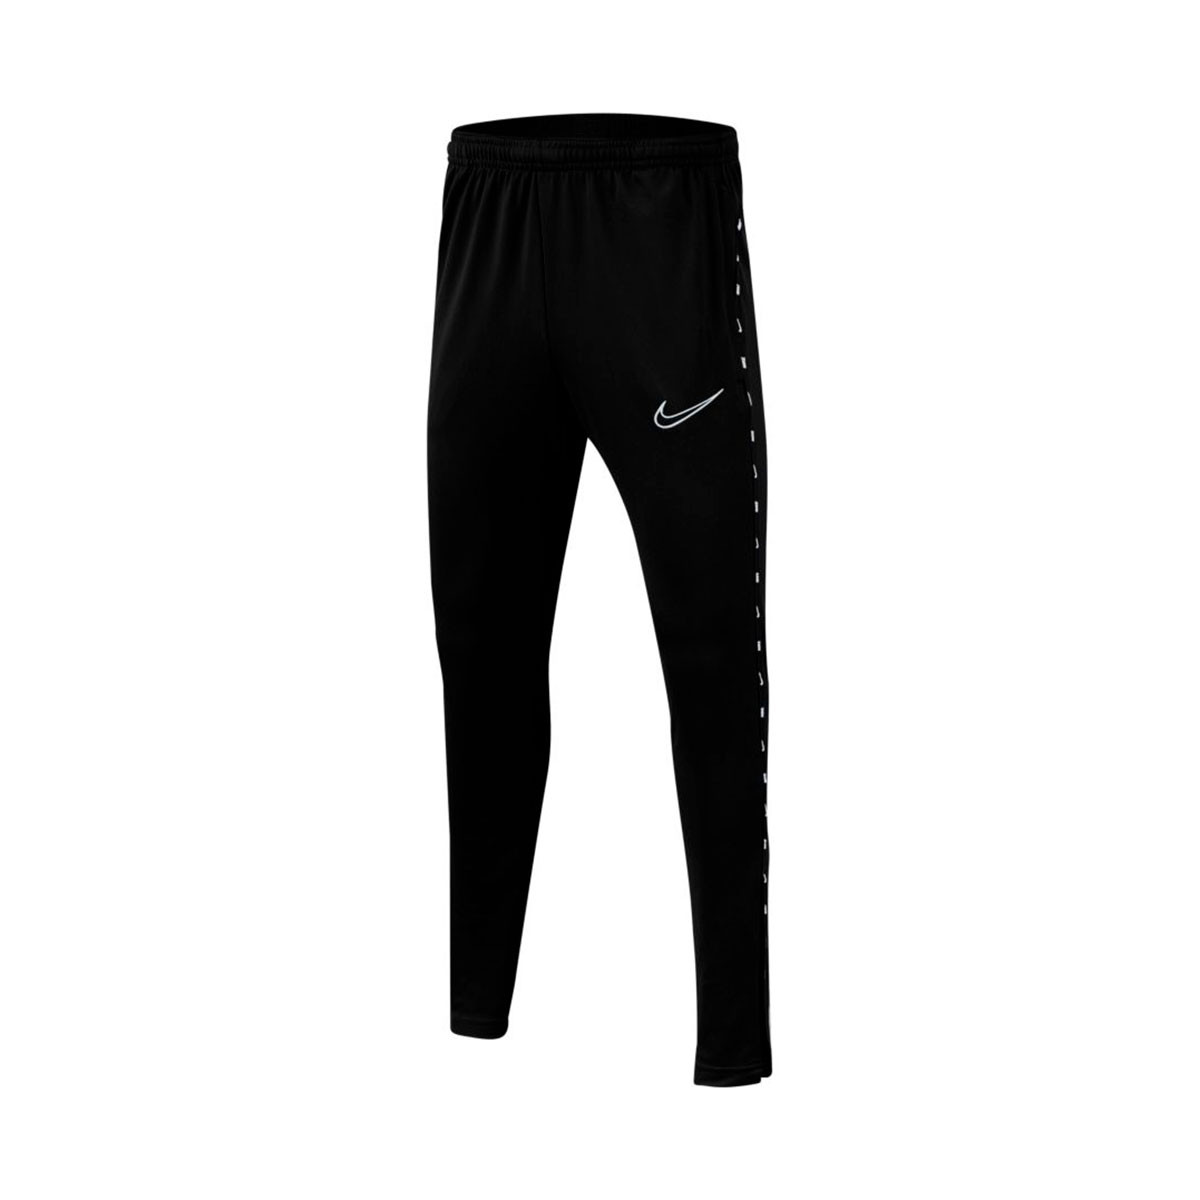 Long pants Nike Dry Academy GX KPZ Niño 